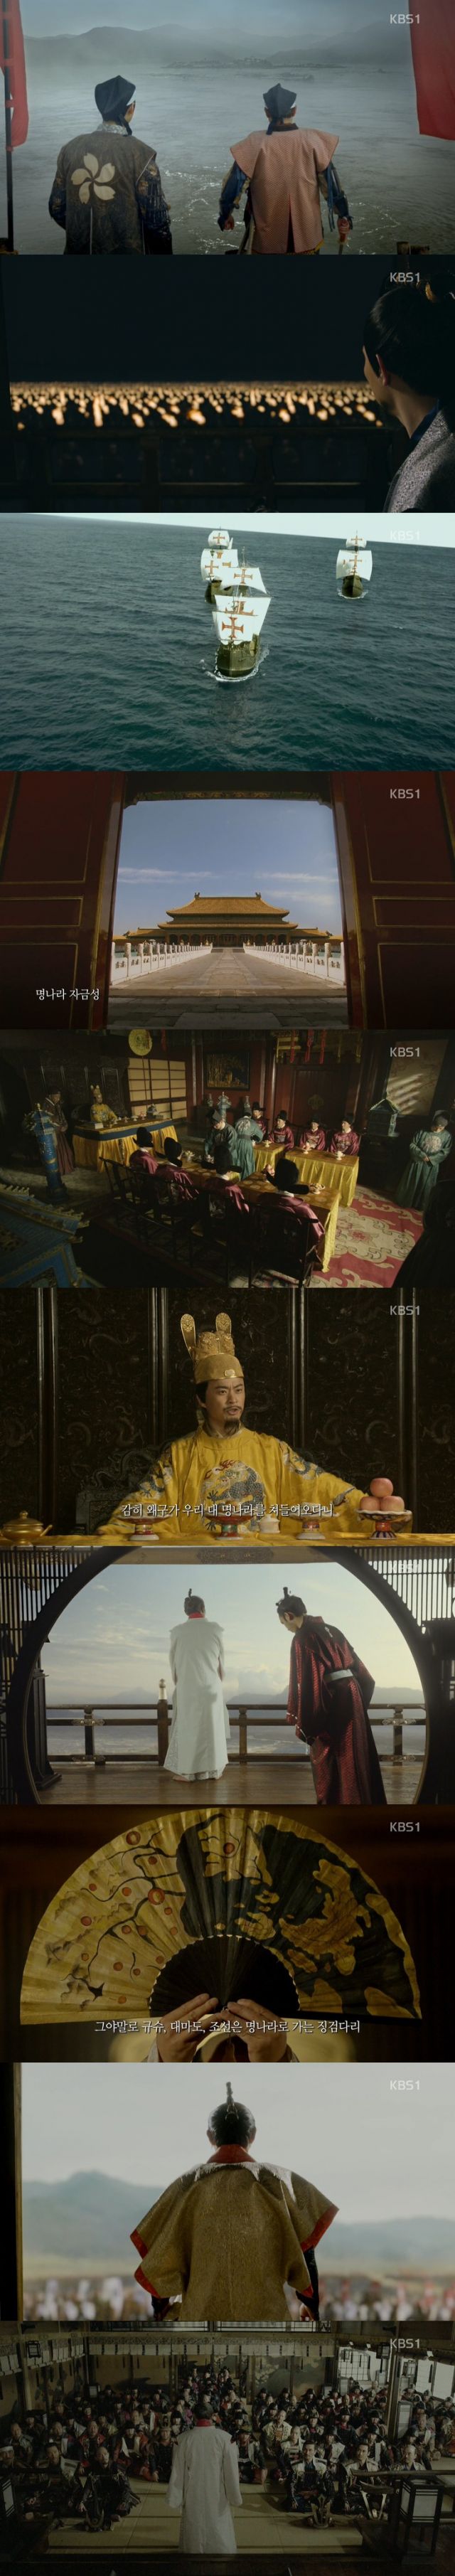 episode 3 captures for the Korean drama 'Three Kingdom Wars - Imjin War 1592'